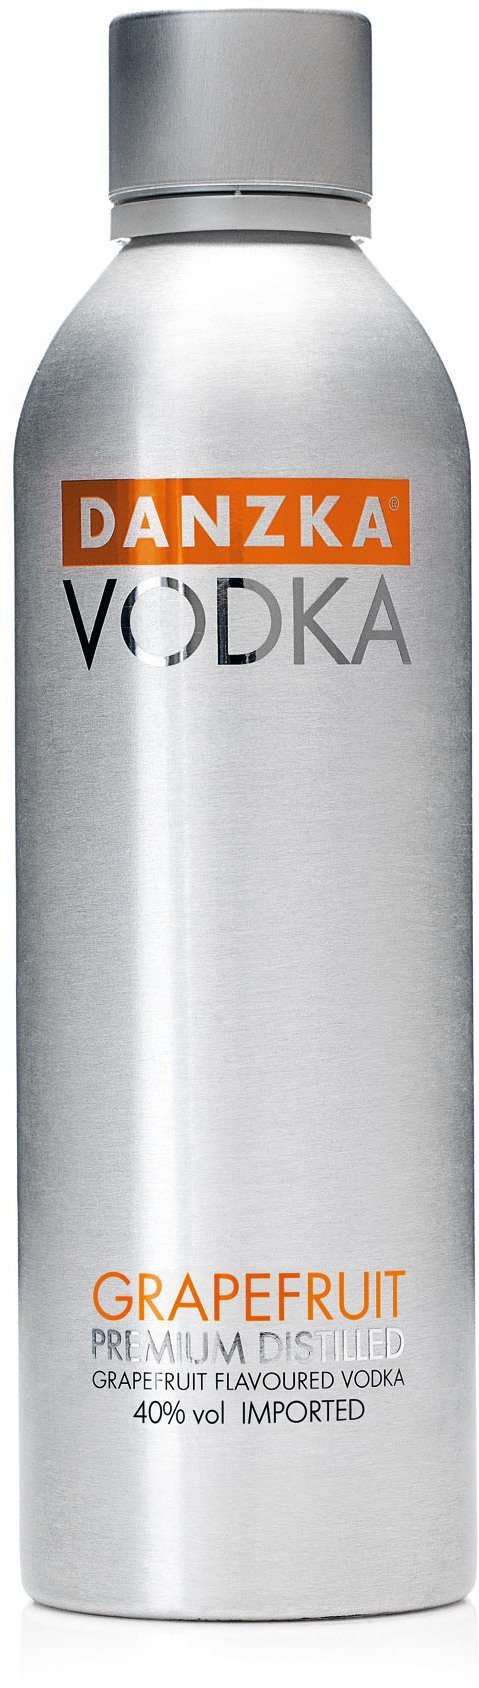 DANZKA Grapefruit – Premium Vodka 1L in duty-free at bordershop Porubne | Vodka